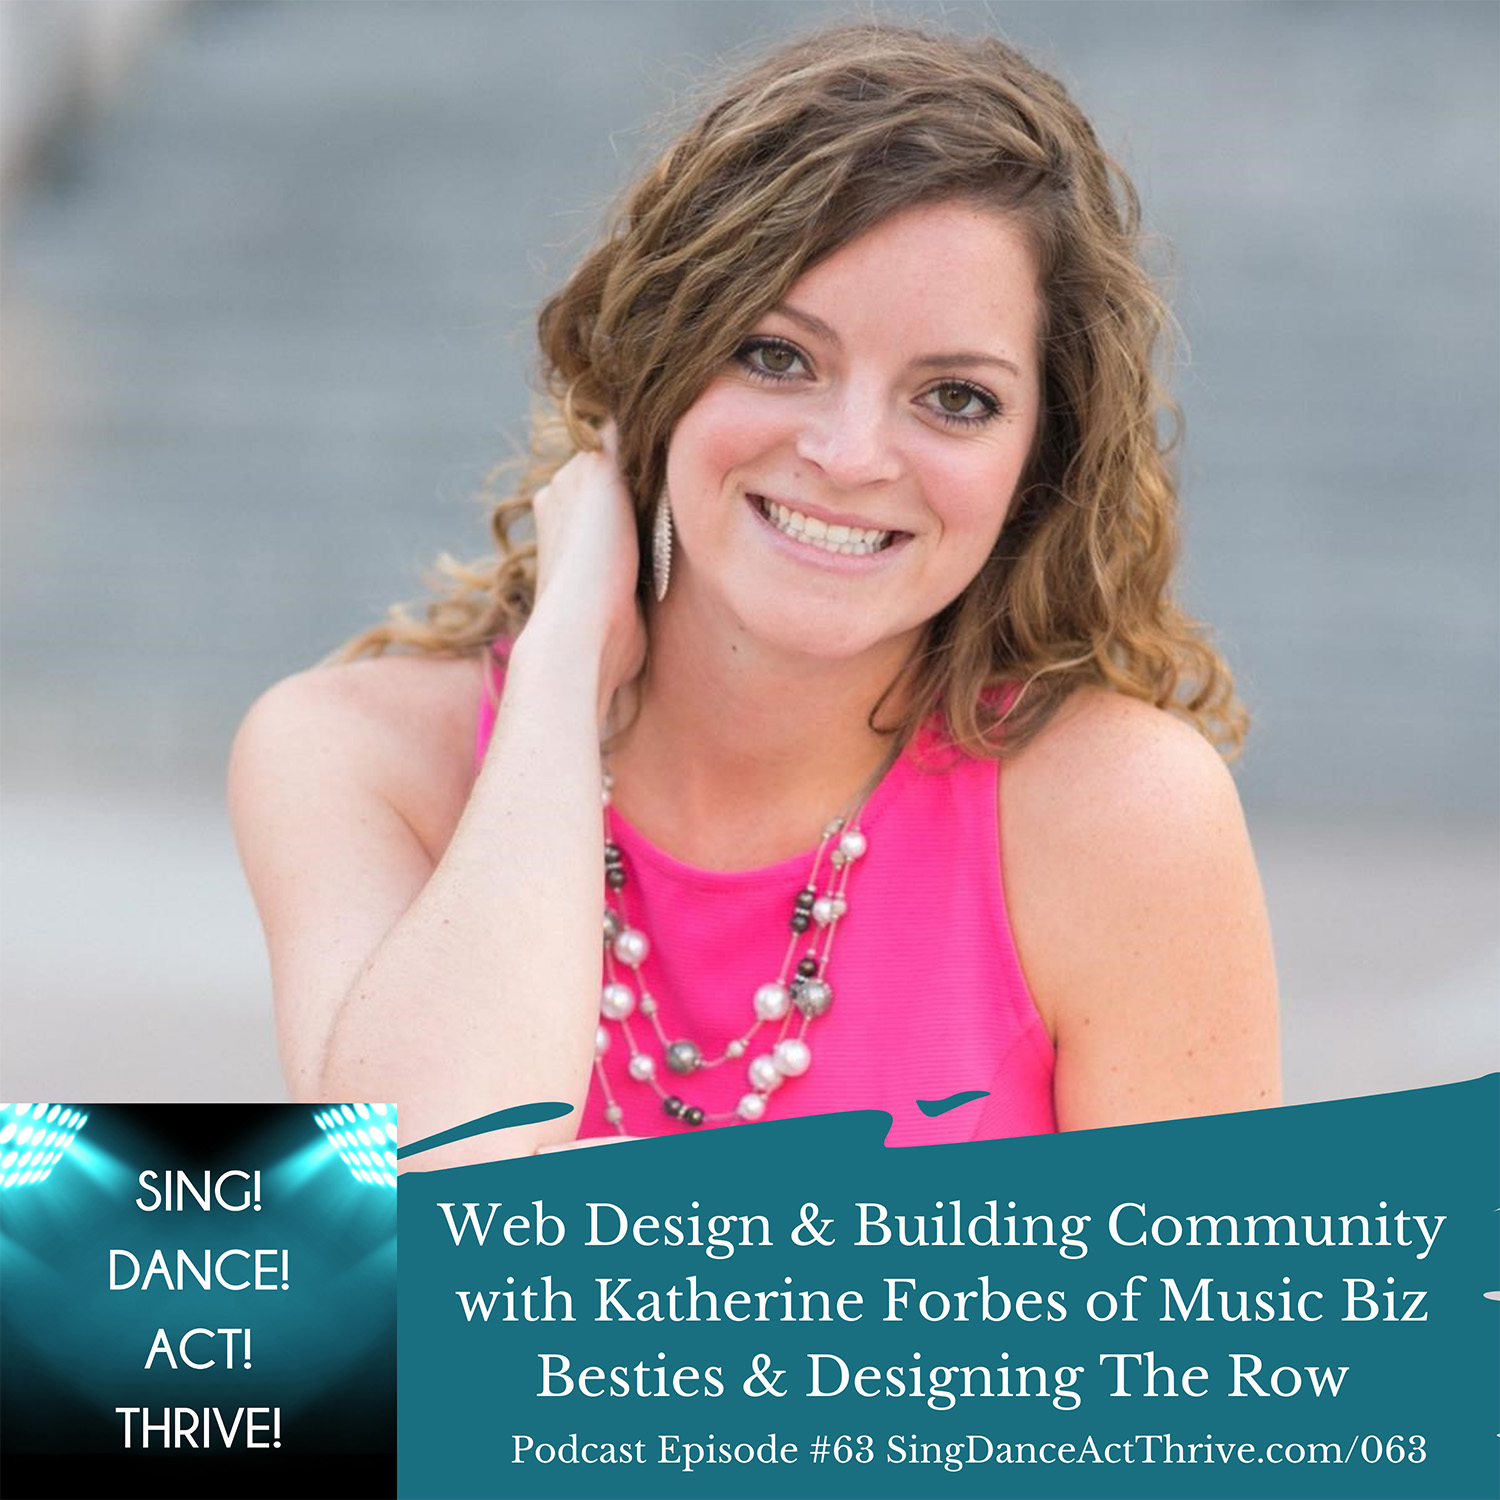 Web-Design-Community-Katherine-Forbes-Music-Biz-Besties-SING-DANCE-ACT-THRIVE-Podcast